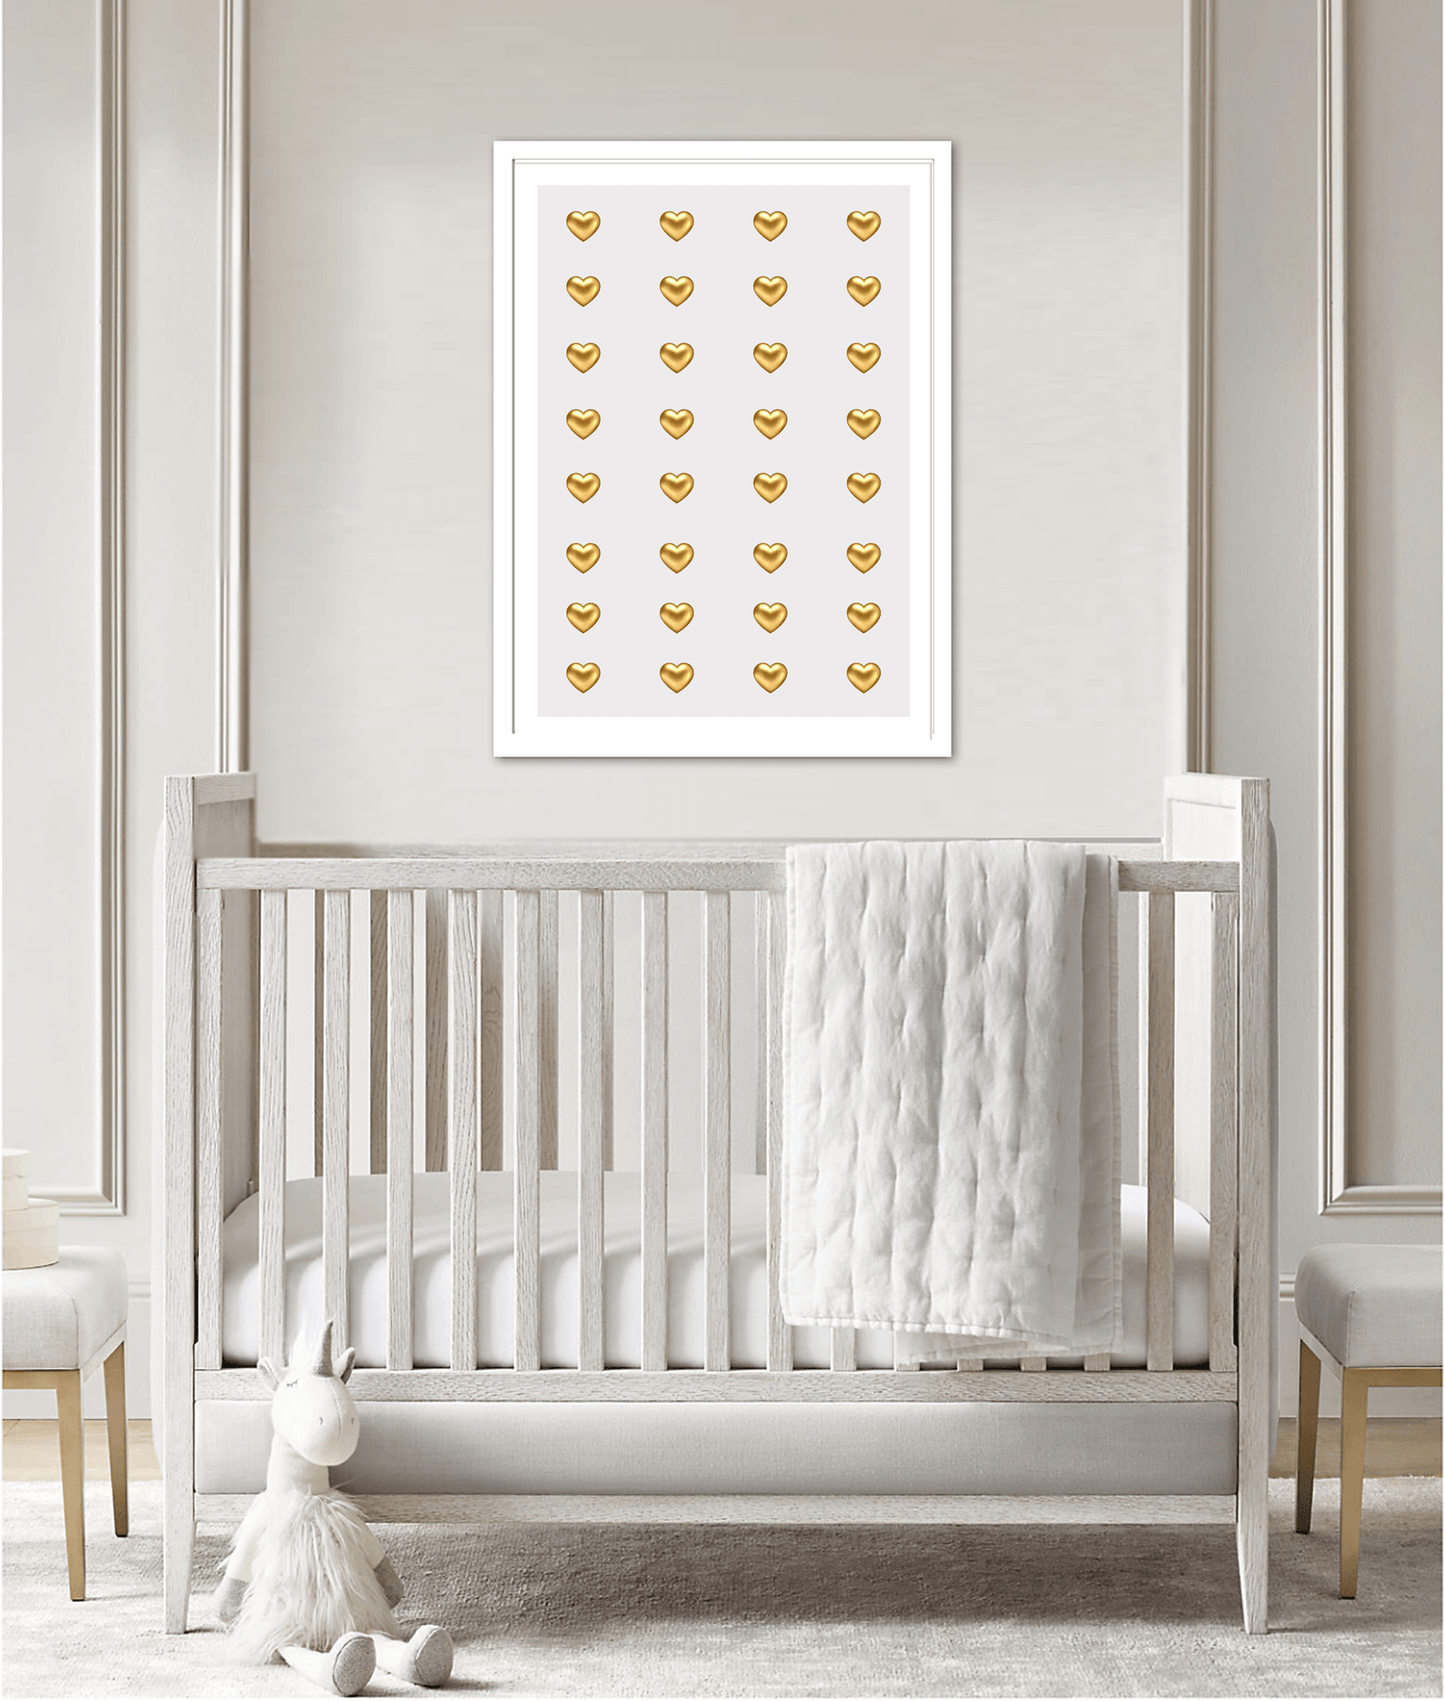 Girls Gold metal wall art heart poster in nursery bedroom